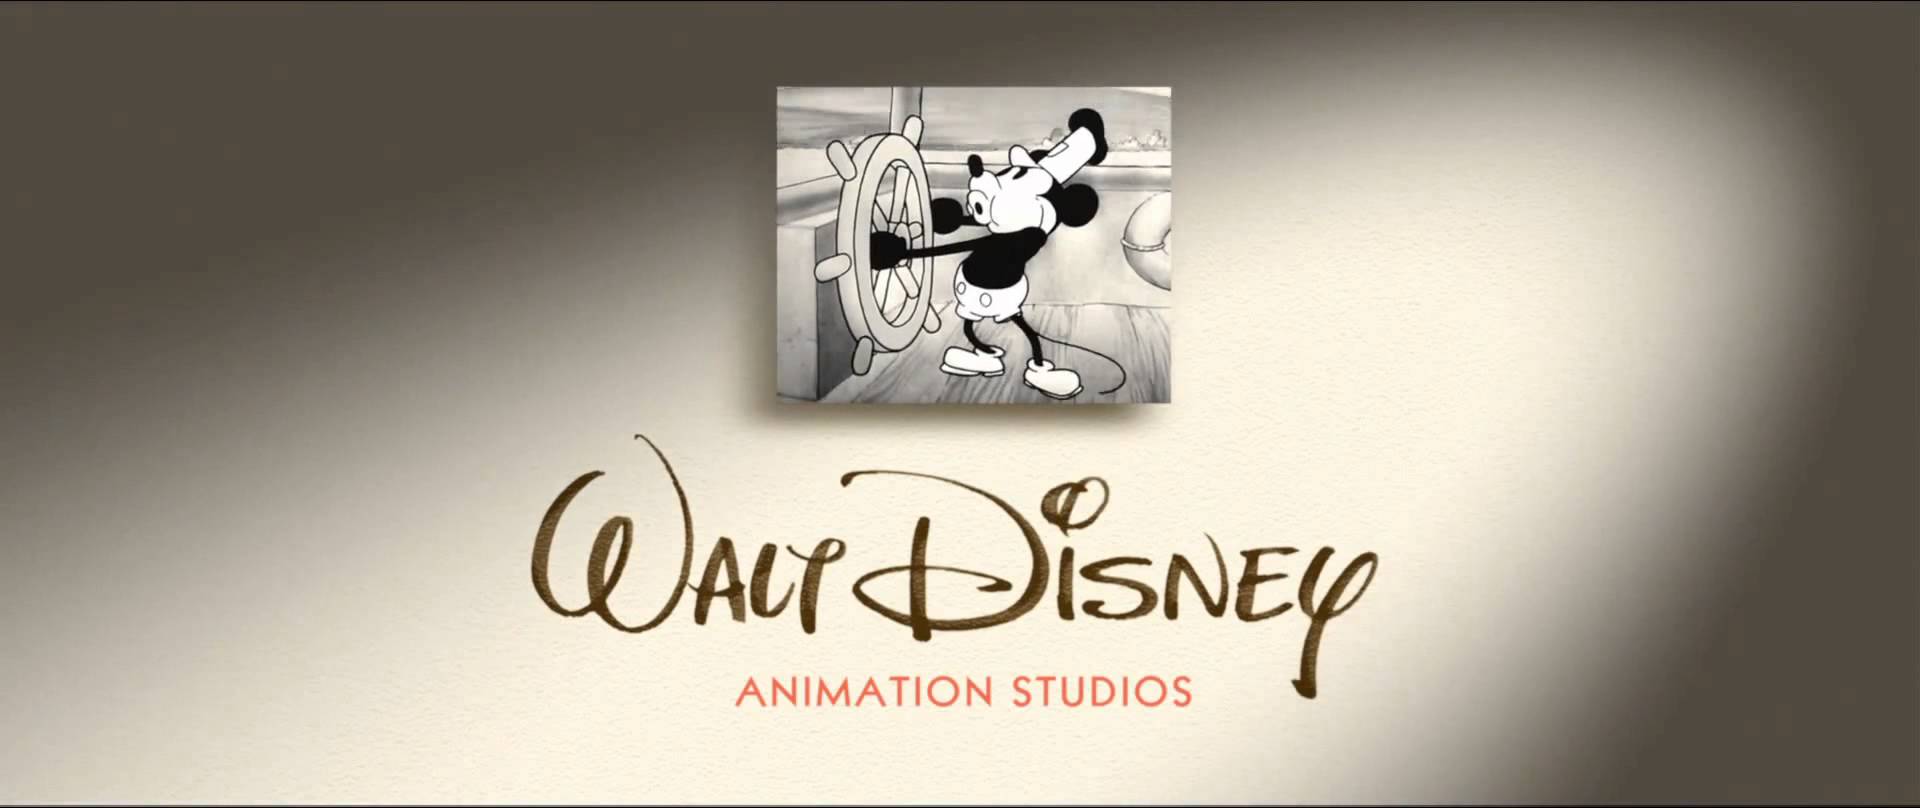 Walt Disney Animation Studios Logo - Walt disney animation studios Logos